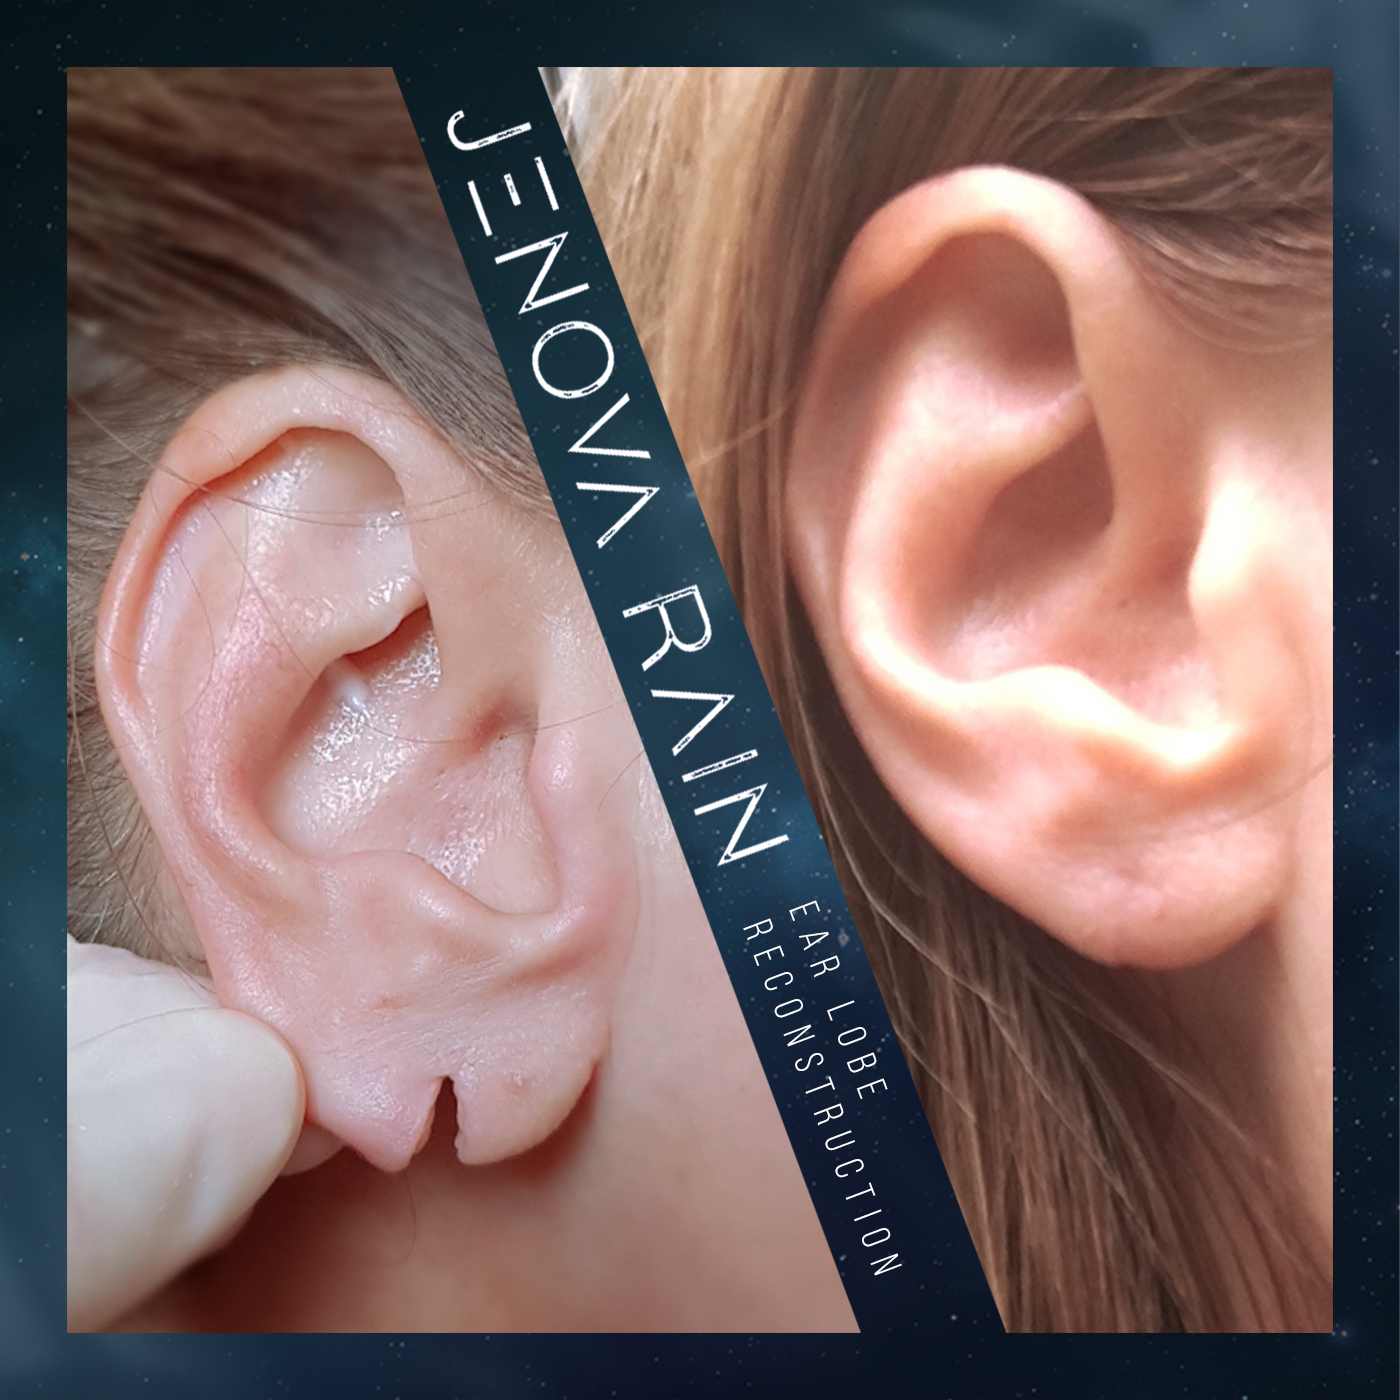 Jenova Rain » Stretched or Split Ear Lobe Reconstruction